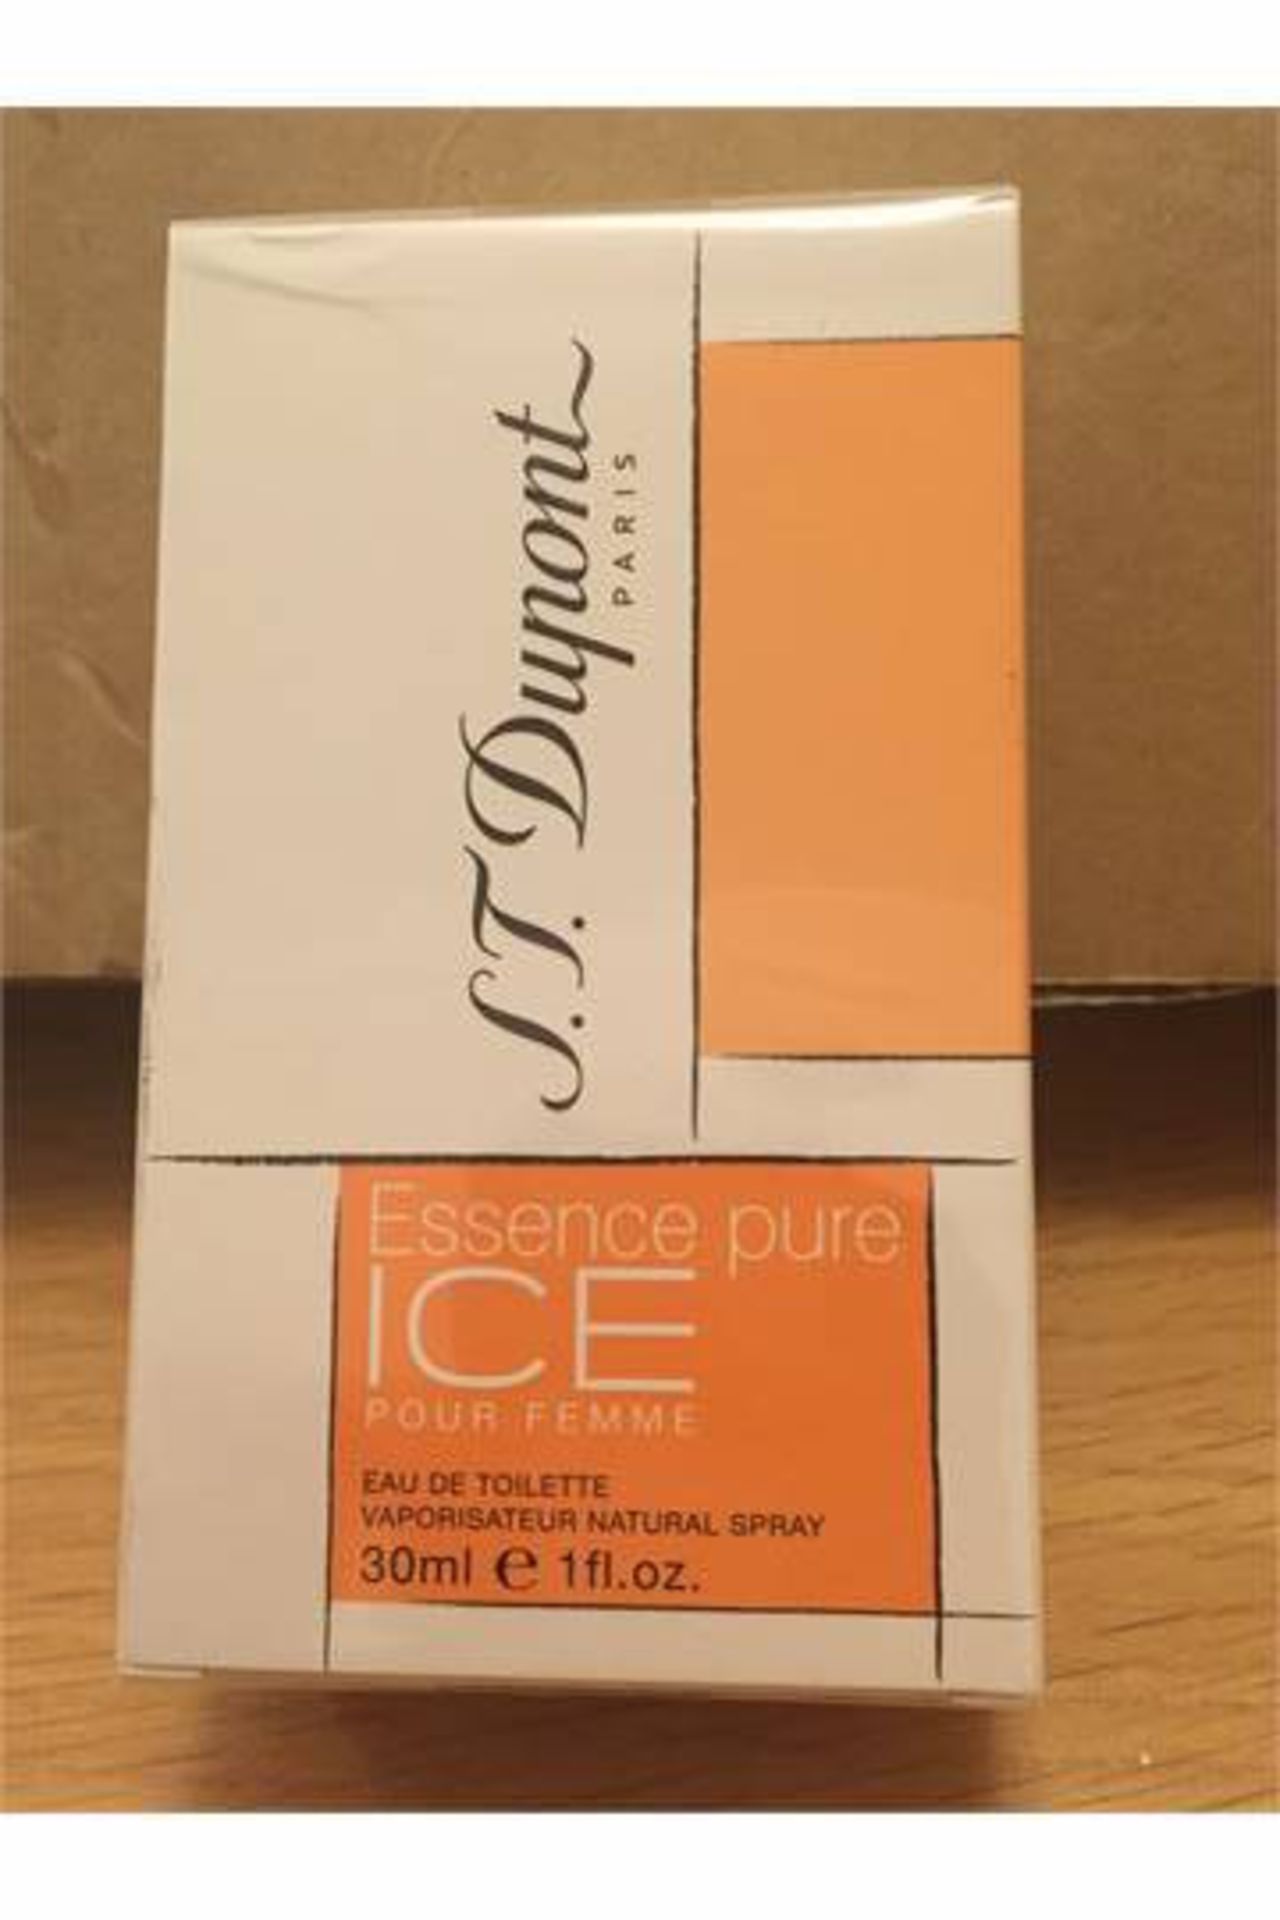 Dupont Essence Pure Ice Pour Femme Eau de Toilette 30ml - RRP £33.00_ Brand new,For women, Sealed, - Image 2 of 2